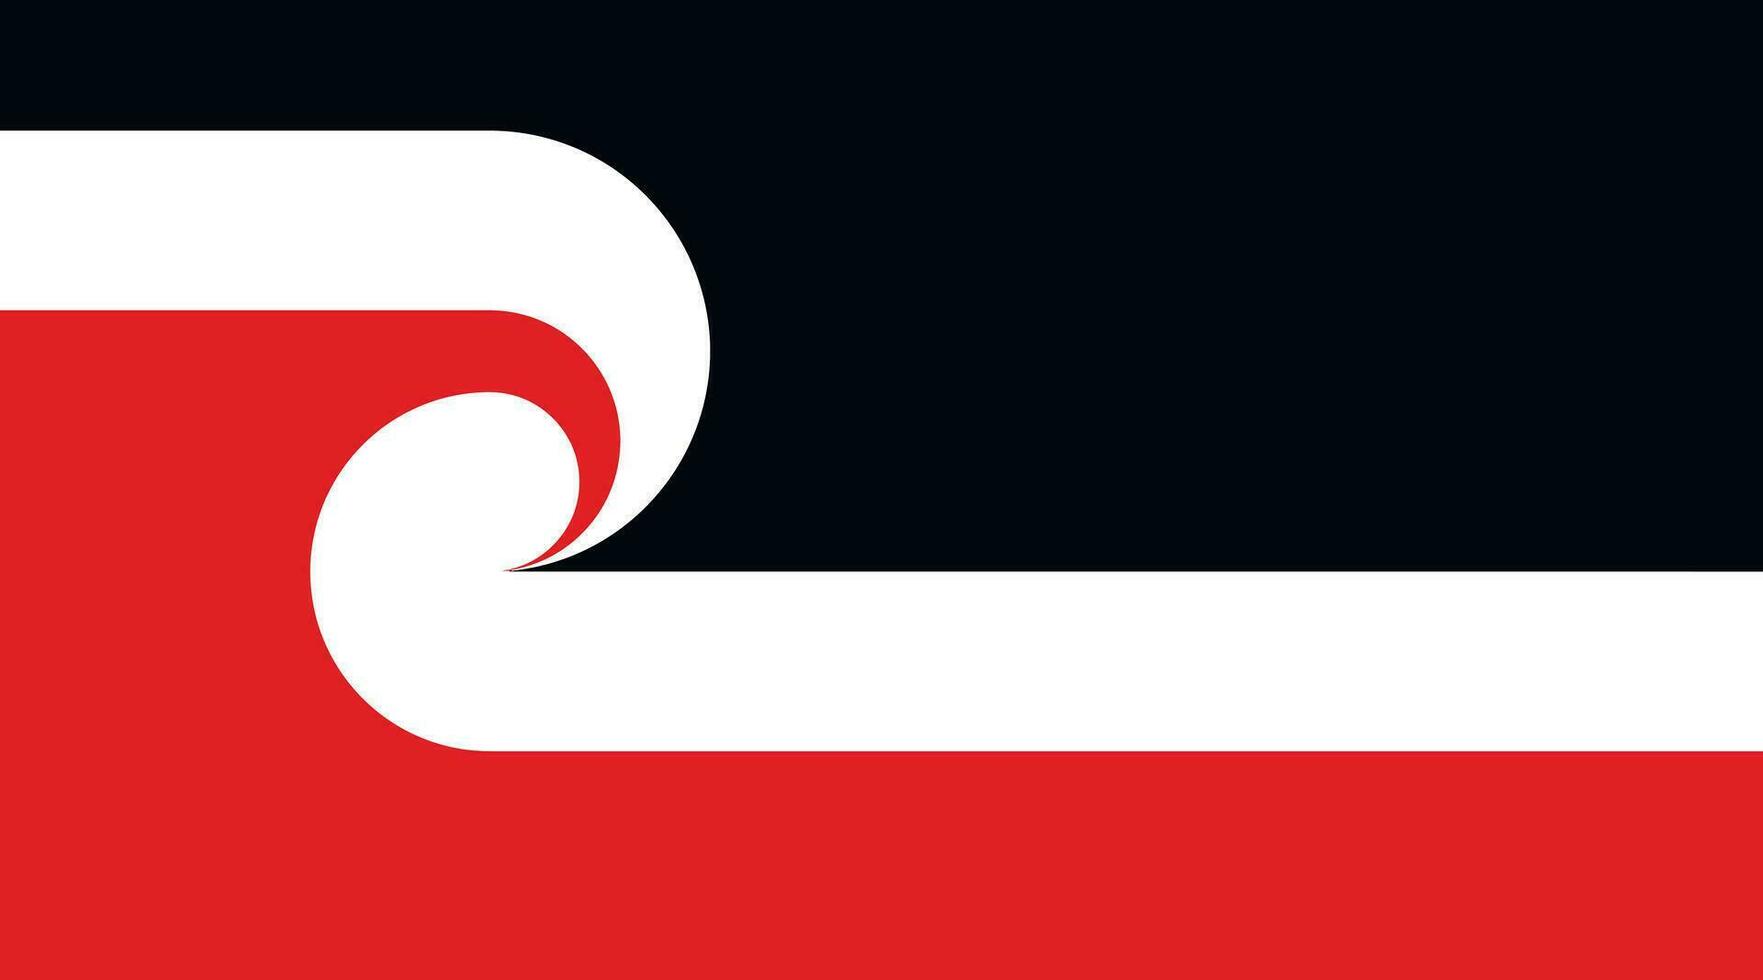 tino rangatiratanga maori sovranità movimento bandiera vettore